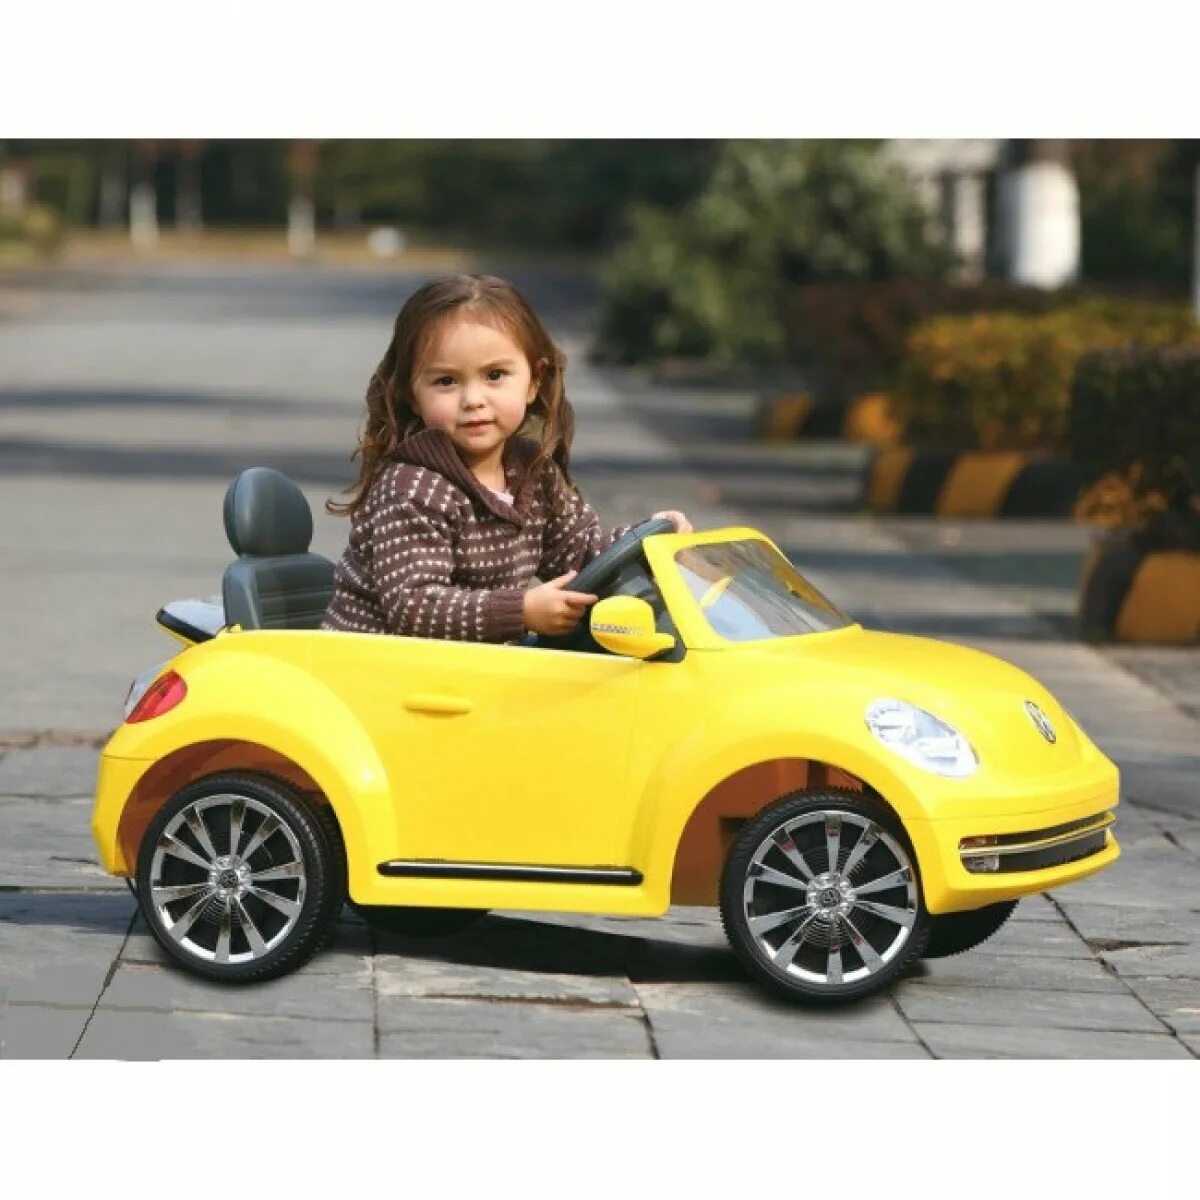 Baby and yellow. Электромобиль Geoby. Дебби Стабенау электромобиль. Детский автомобиль. Электроавтомобиль детский.